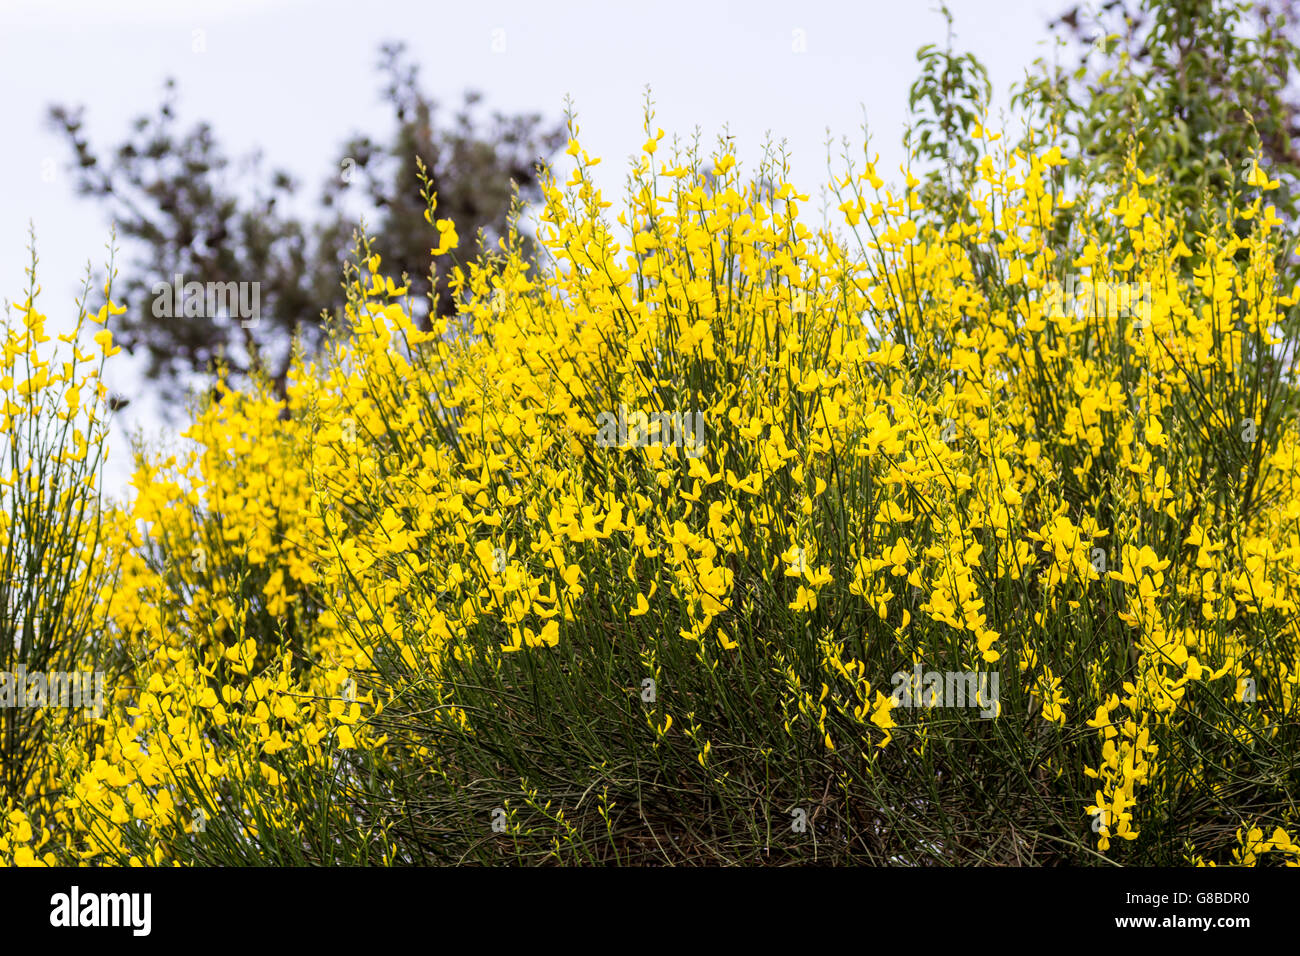 Forsythia bushes against a spring blue sky. Stock Photo